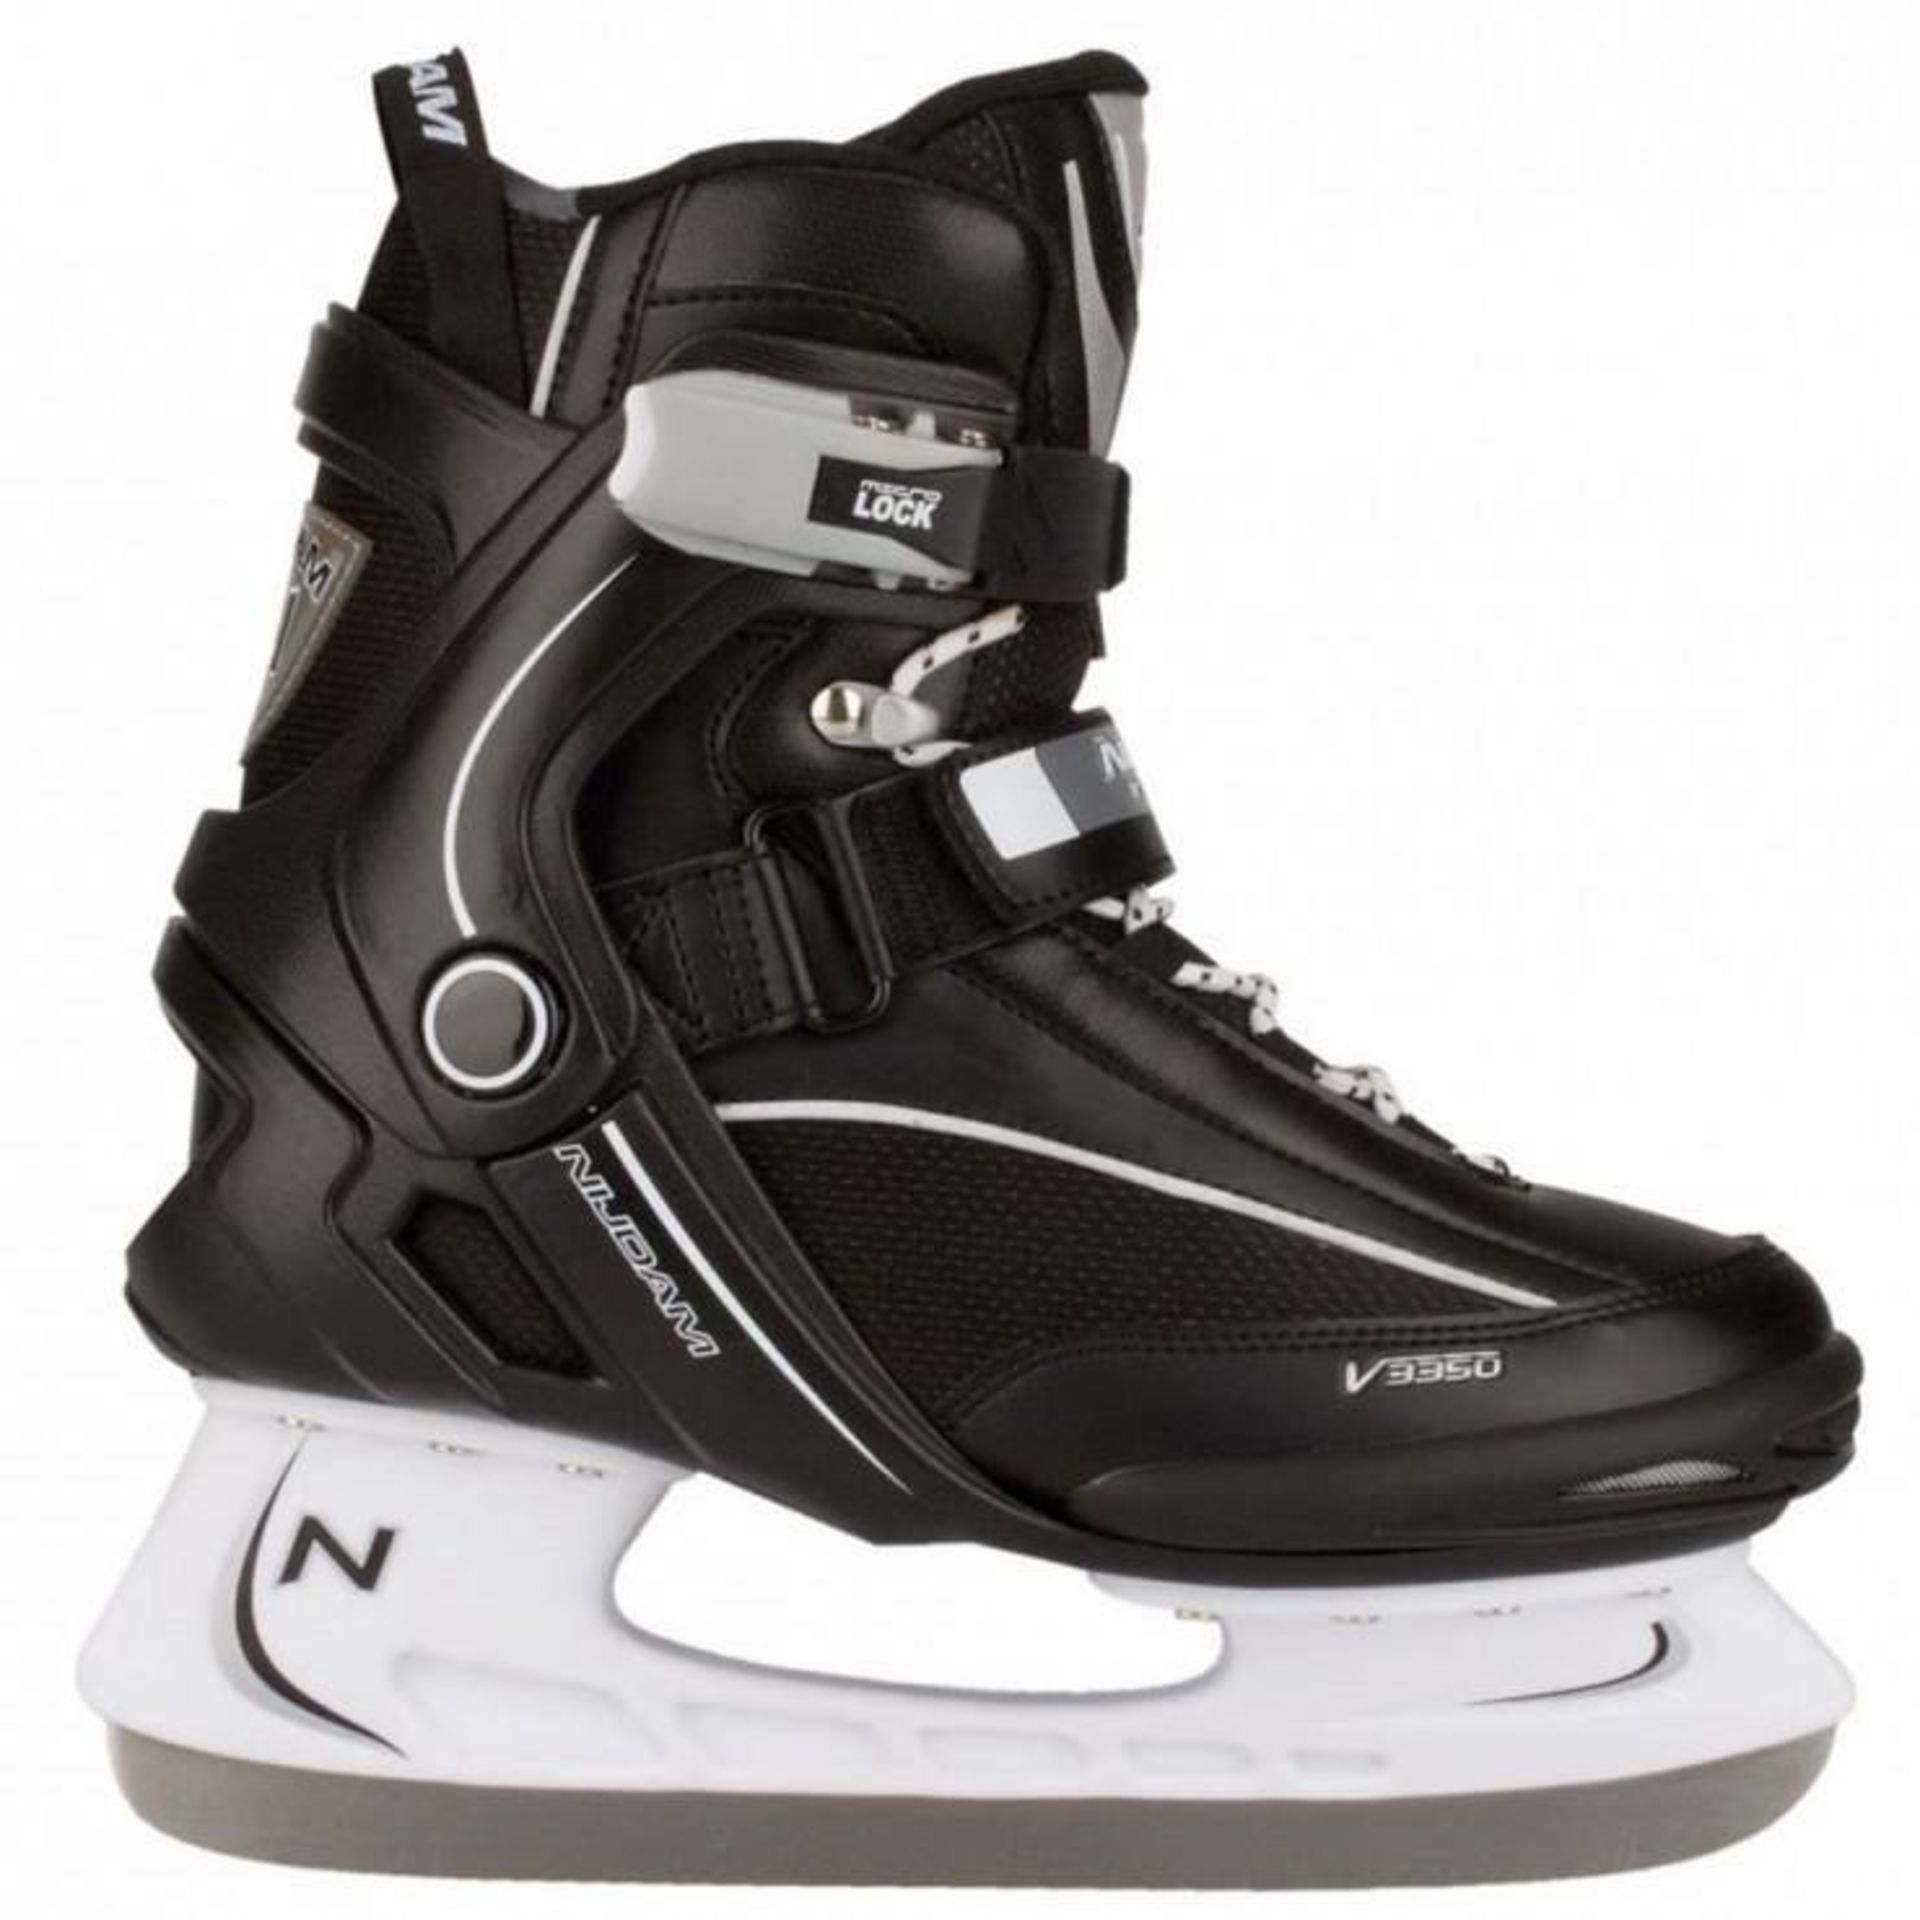 Nijdam Ice Hockey Skates (Size 38)